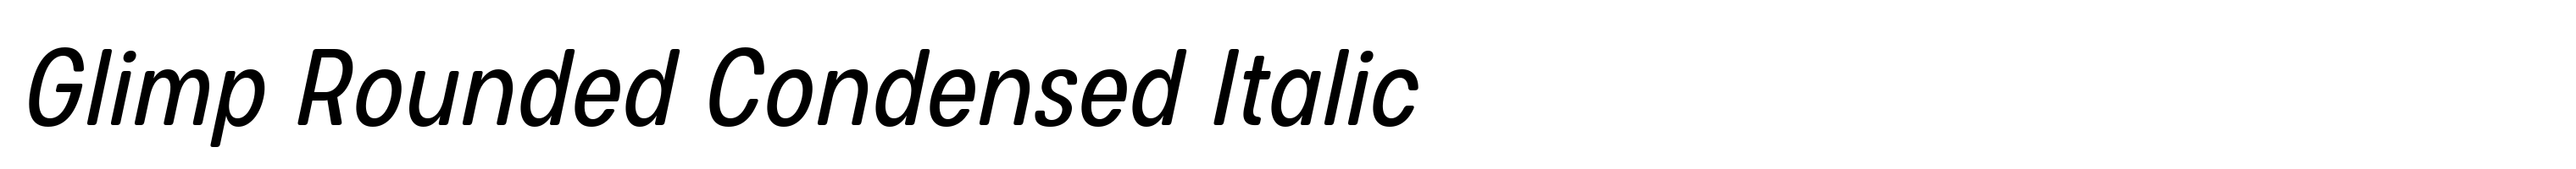 Glimp Rounded Condensed Italic